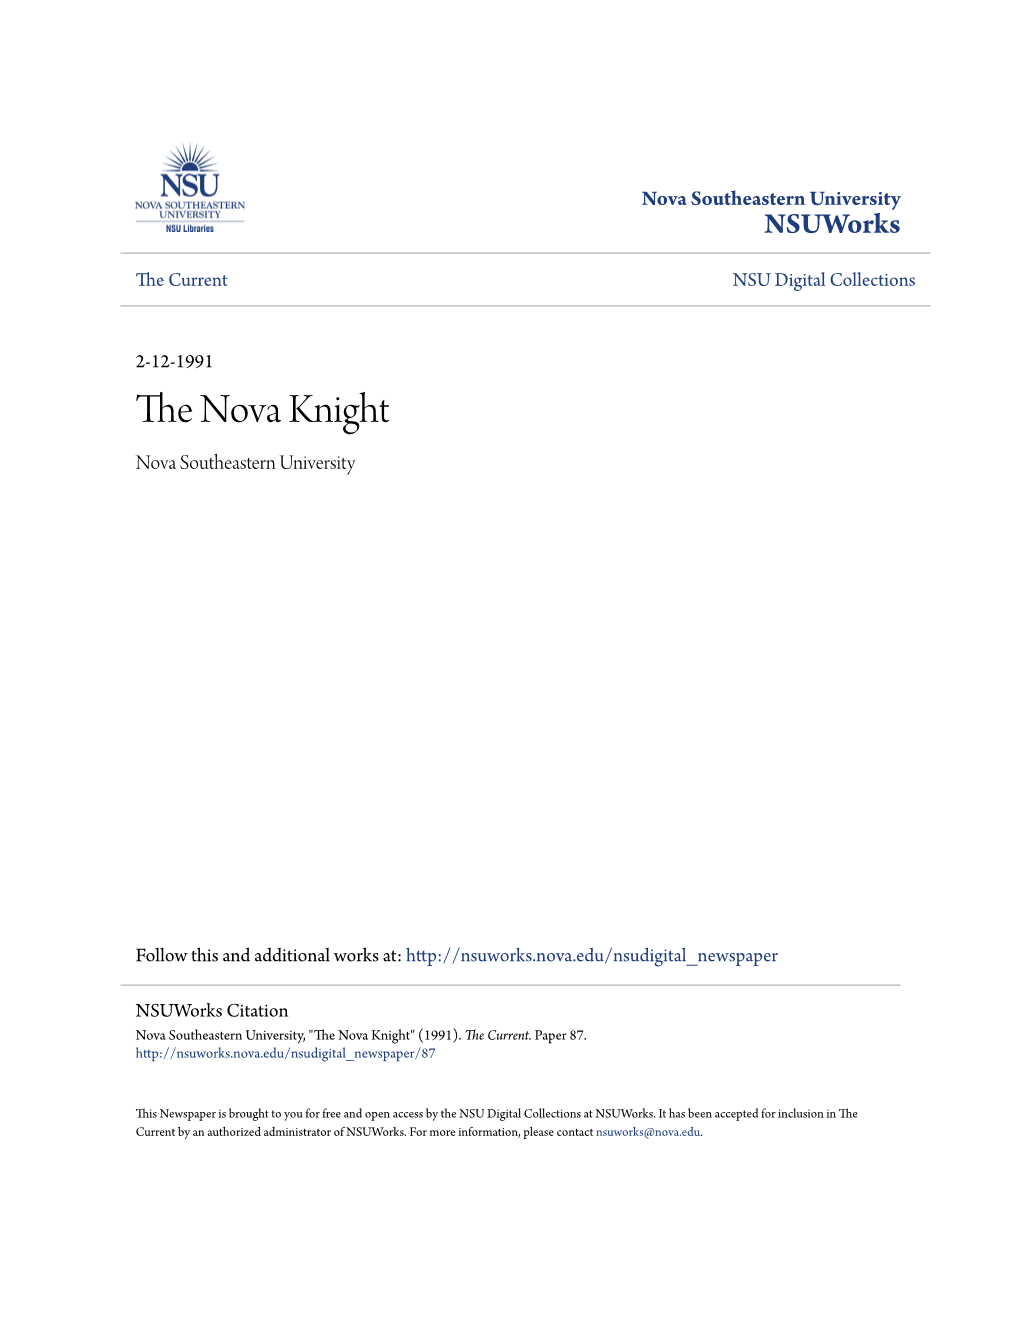 The Nova Knight EDITORIALS